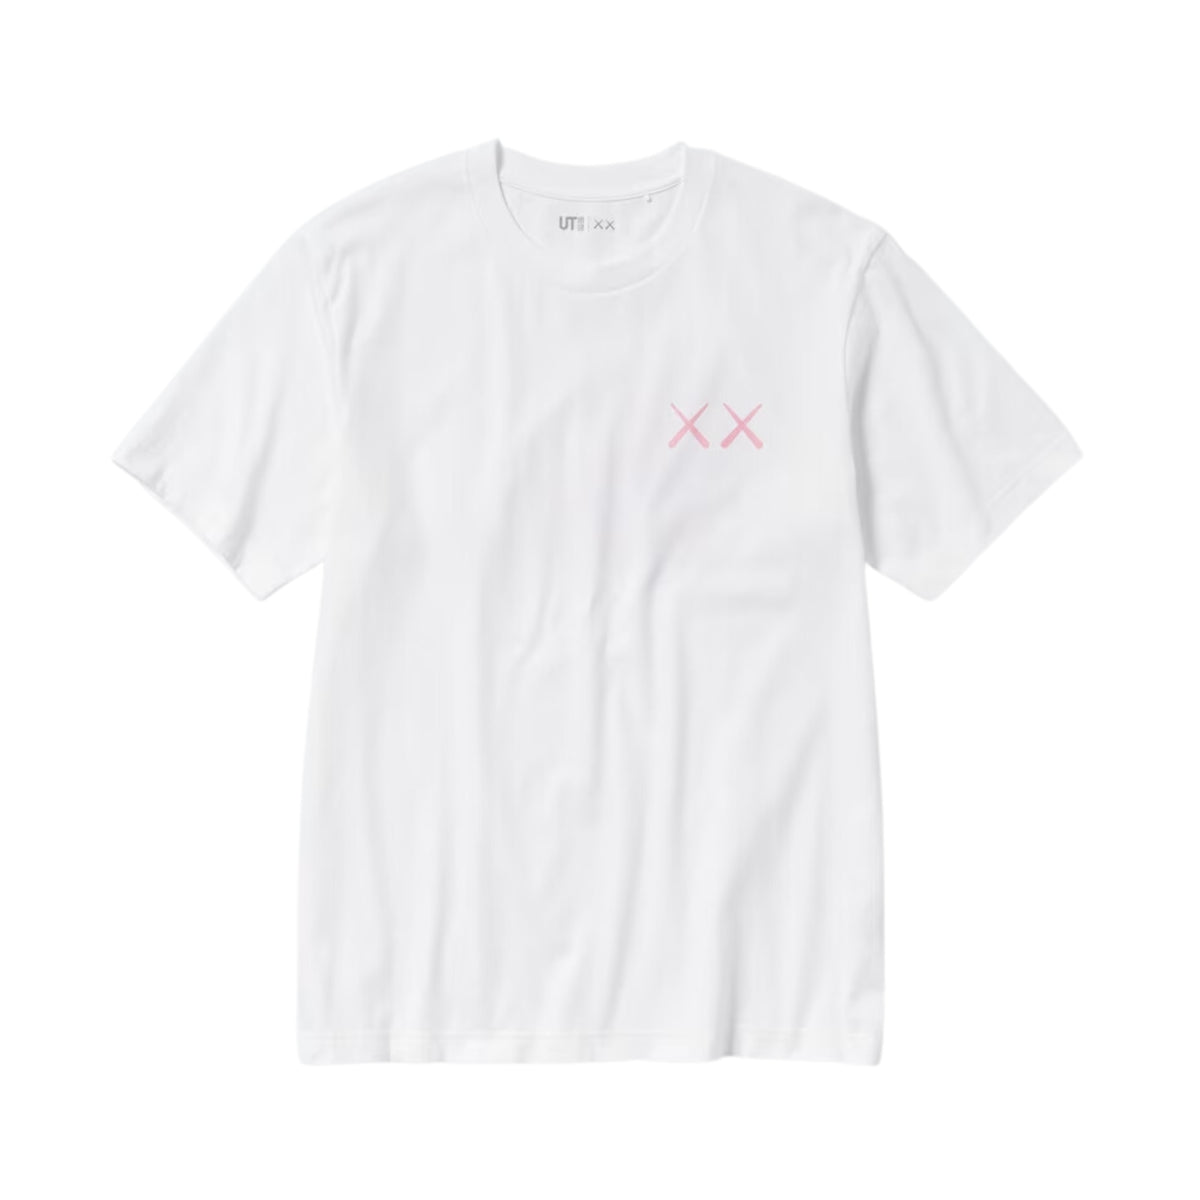 KAWS x Uniqlo UT Short Sleeve Graphic T-shirt "White" - street-bill.dk